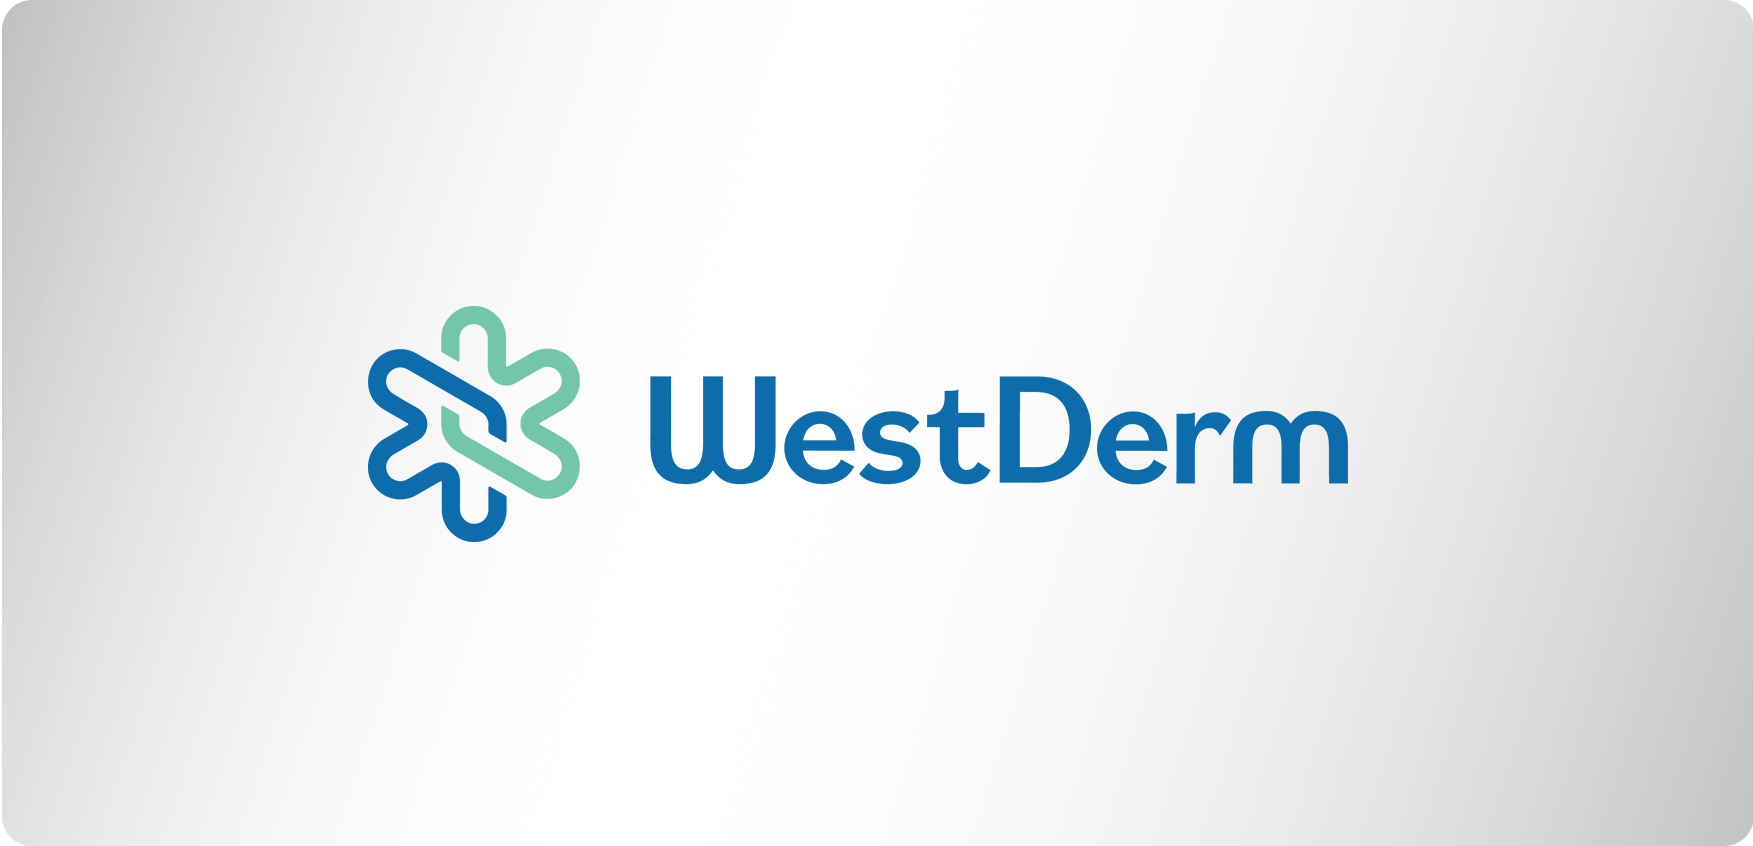 WestDerm logo on a gray gradient background